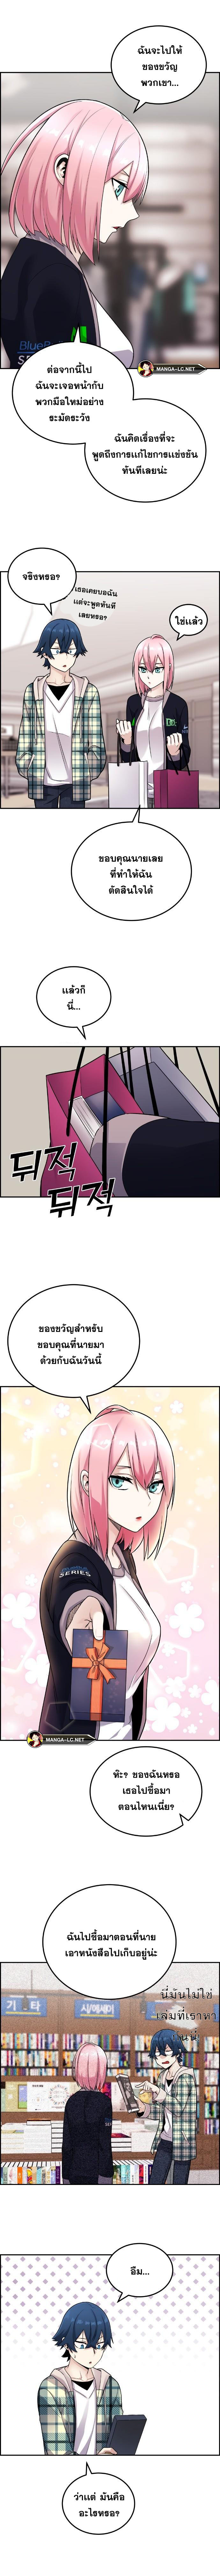 Webtoon Character Na Kang Lim ร ยธโ€ขร ยธยญร ยธโขร ยธโ€”ร ยธยตร ยนห 18 (11)